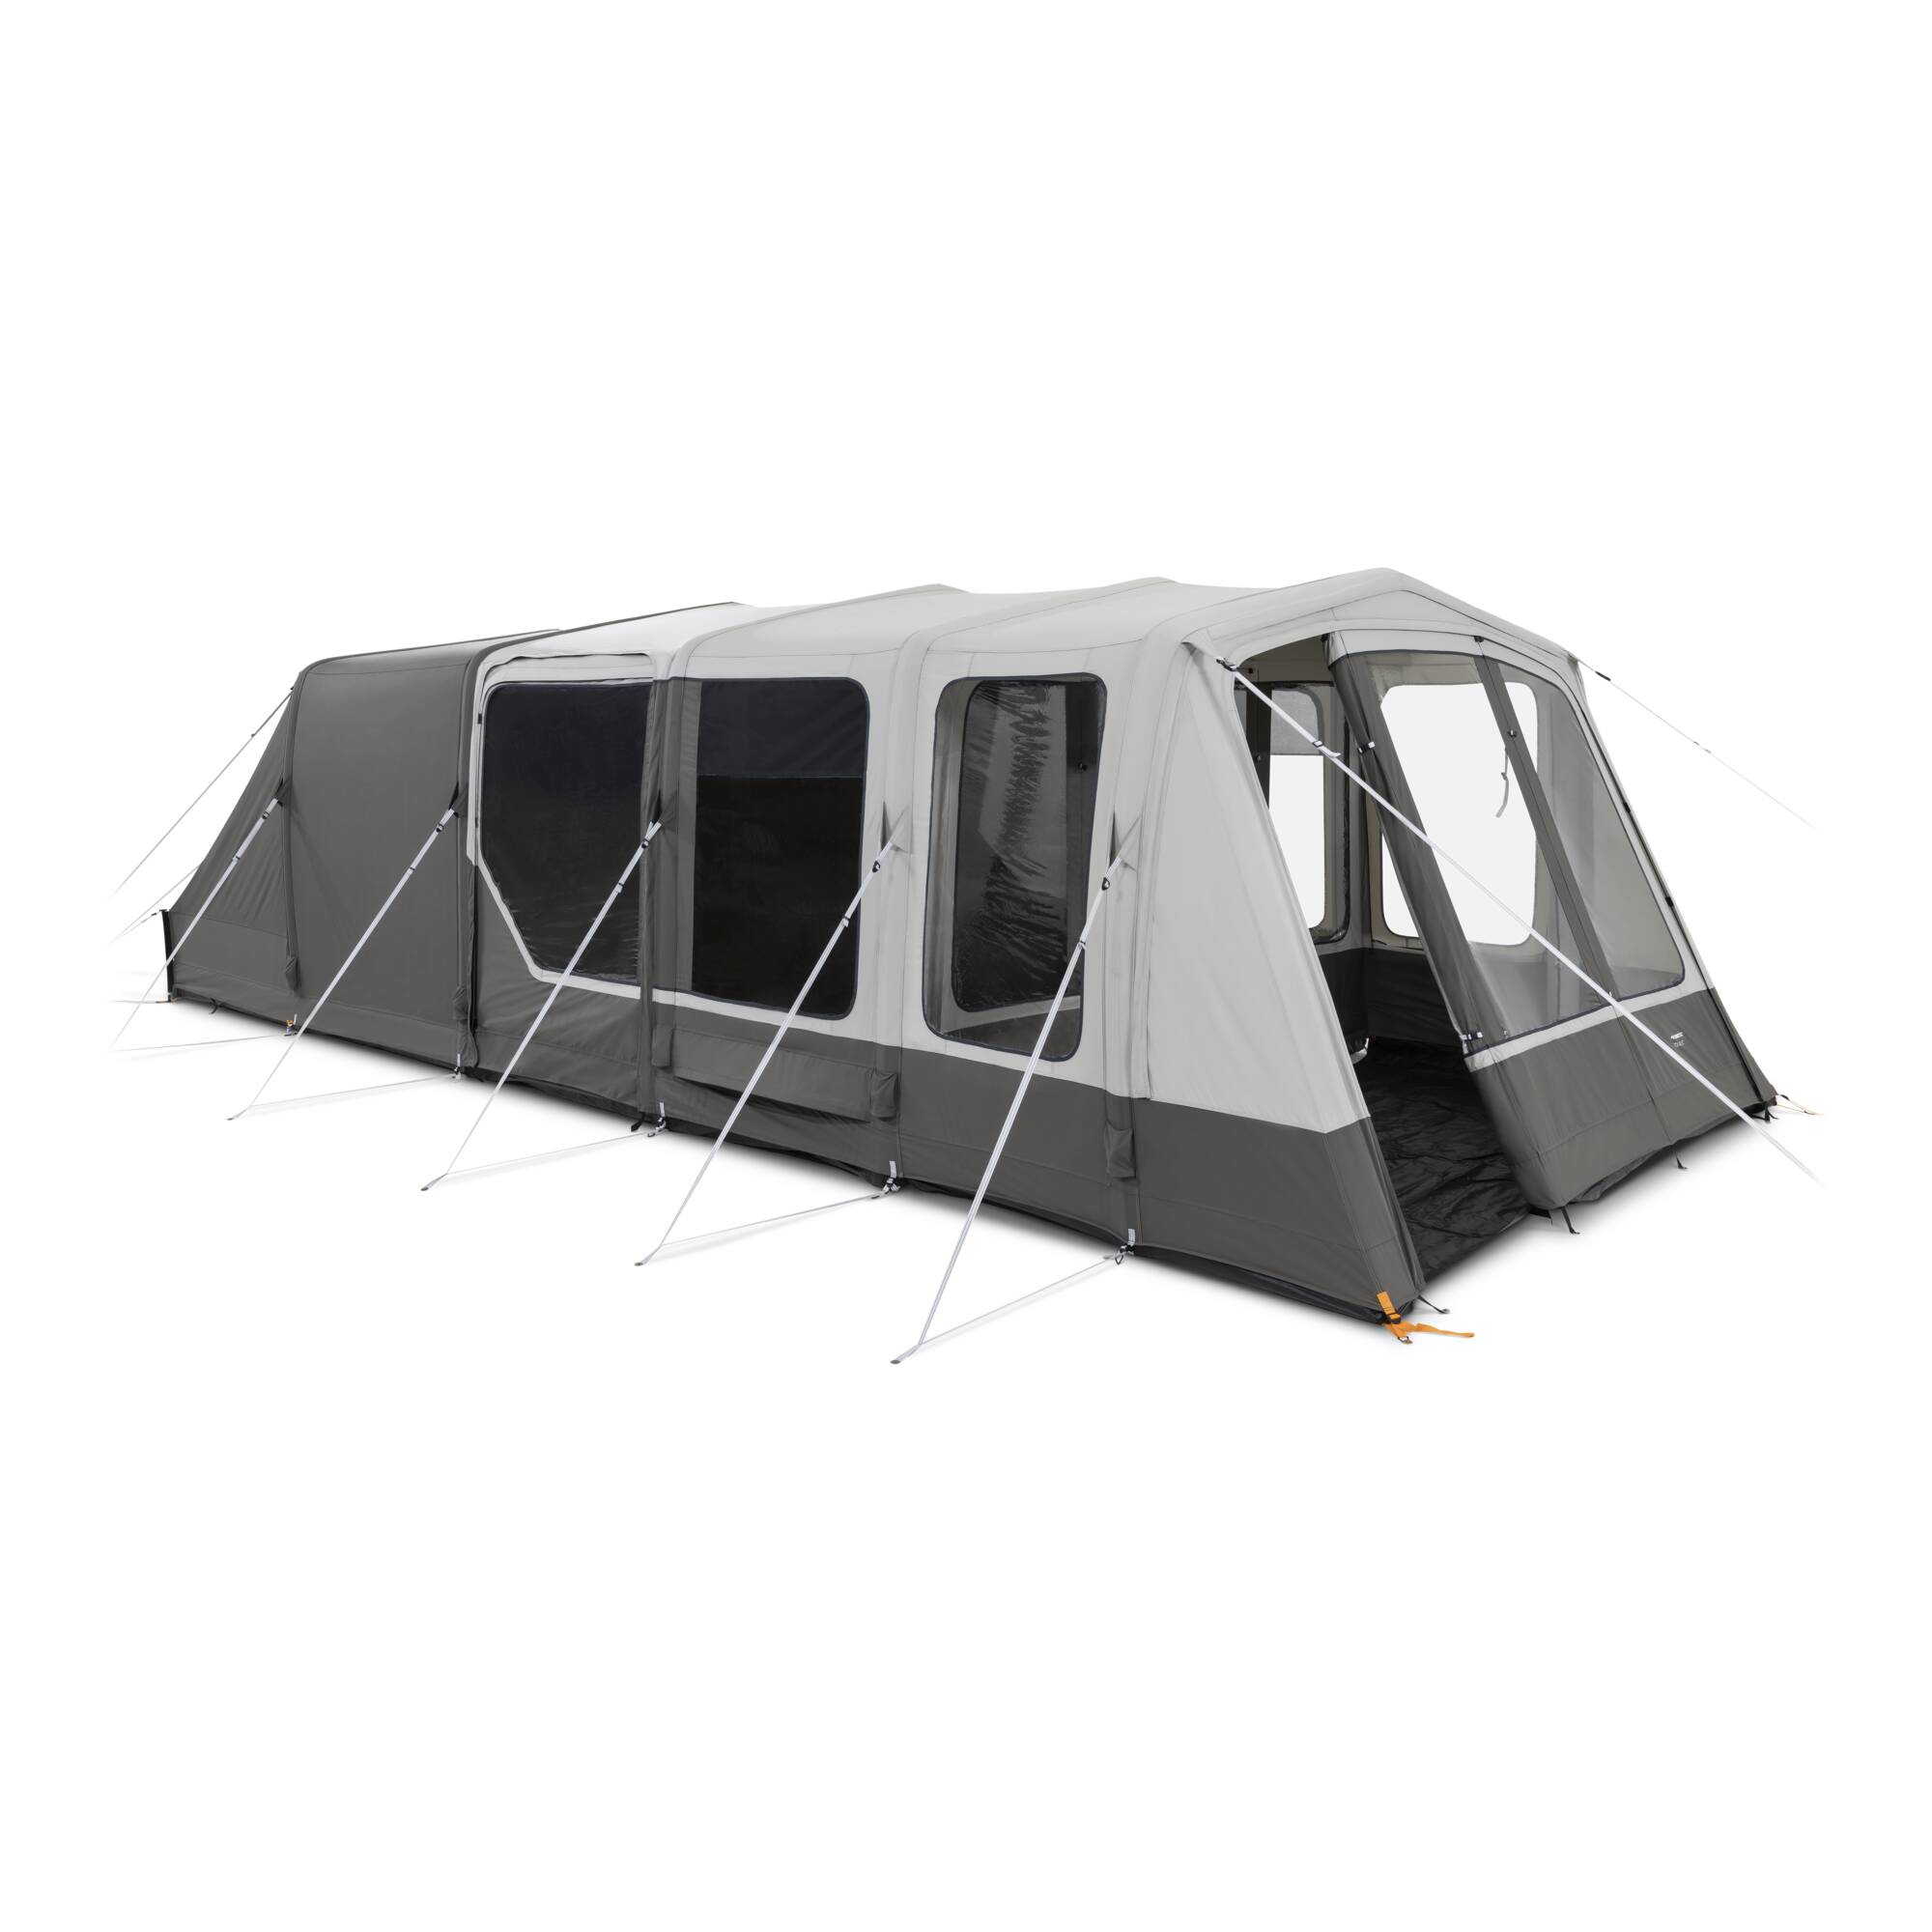 Dometic Ascension Ftx 401tc Tent Spare Parts